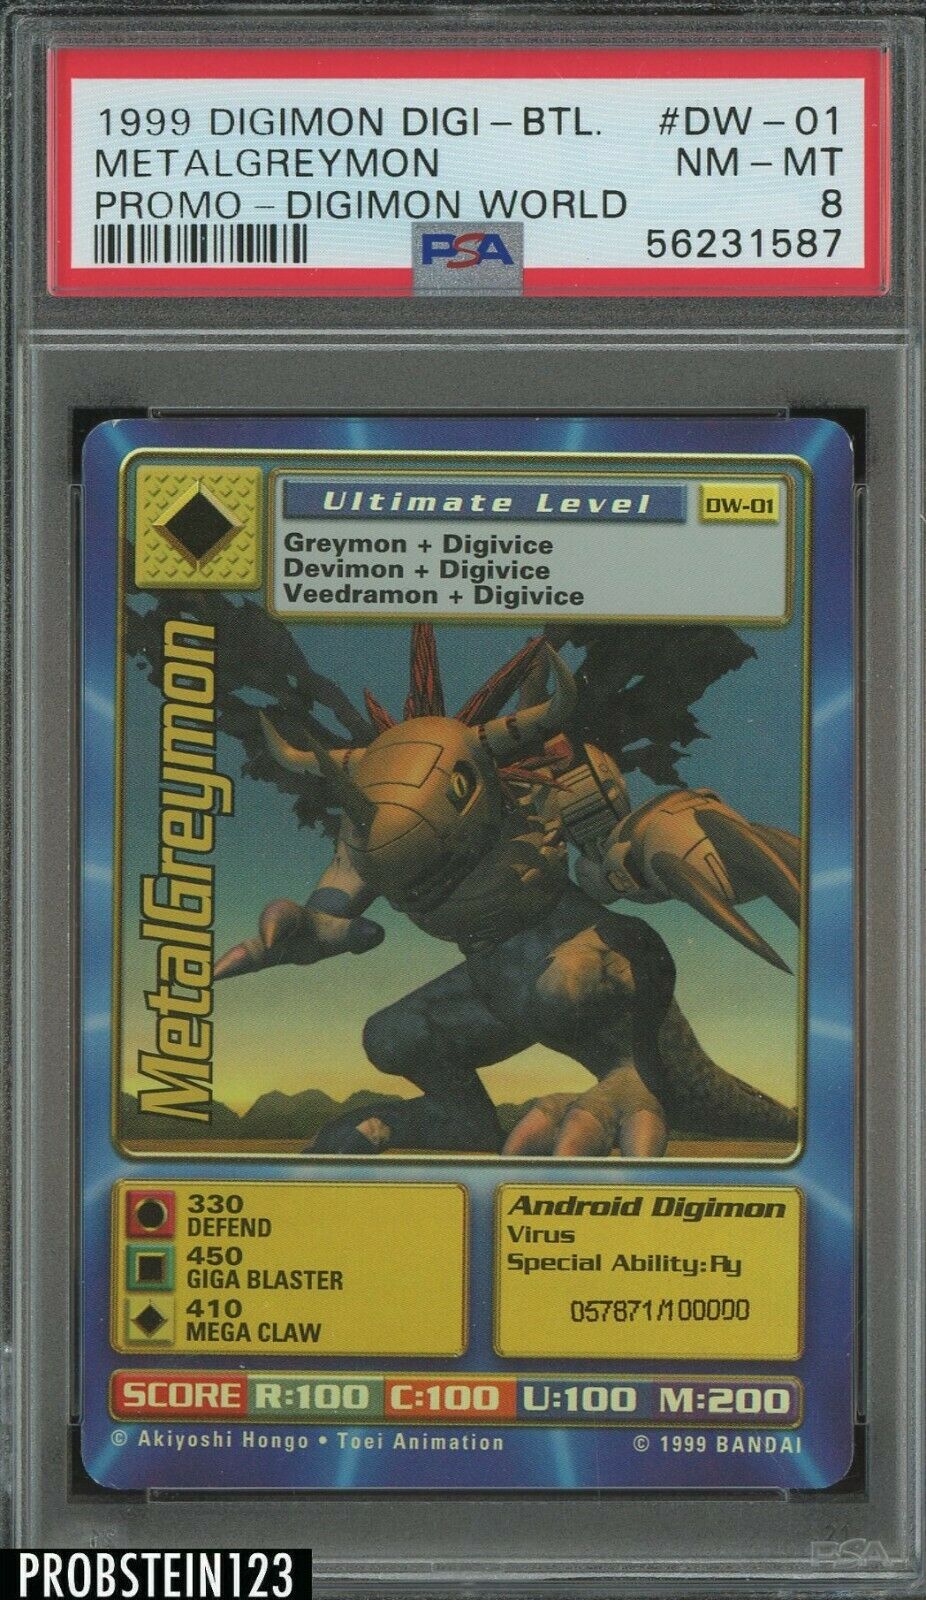 Digimon World PlayStation Promo DW-01 MetalGreymon - number 057871 / 100,000